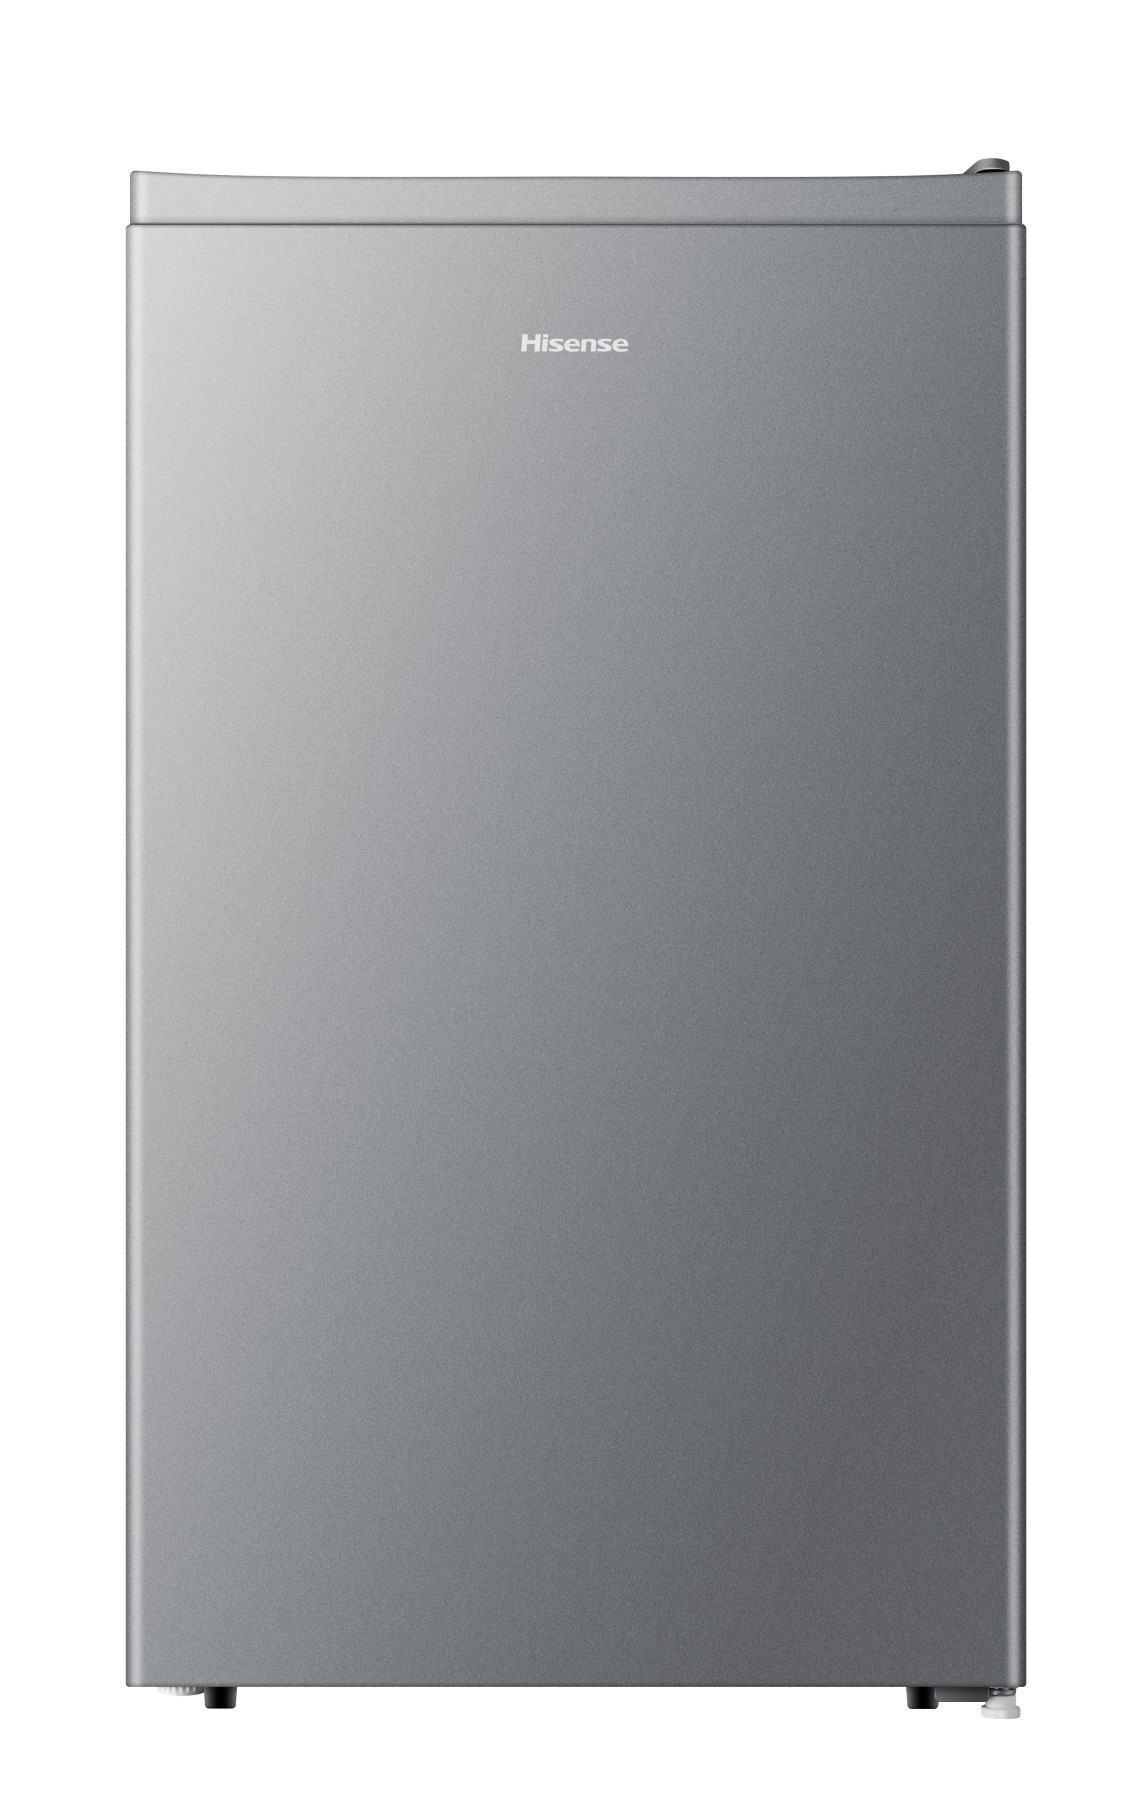 Hisense 093DR 90L Single Door Refrigerator